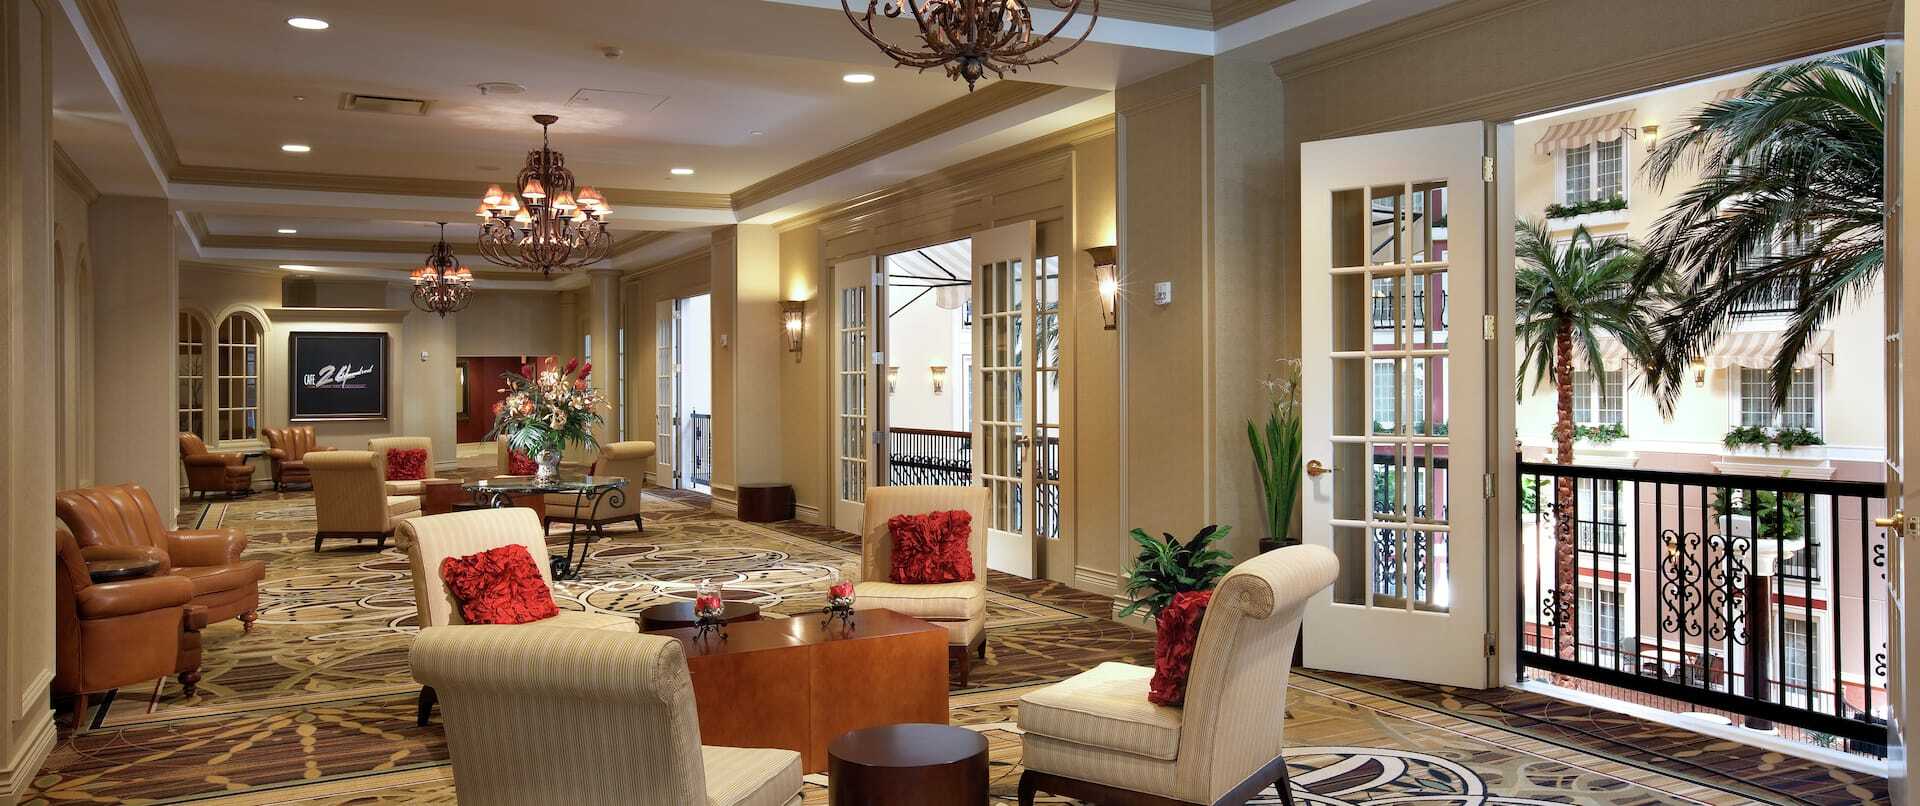 Photo of DoubleTree Resort by Hilton Hotel Lancaster, Lancaster, PA